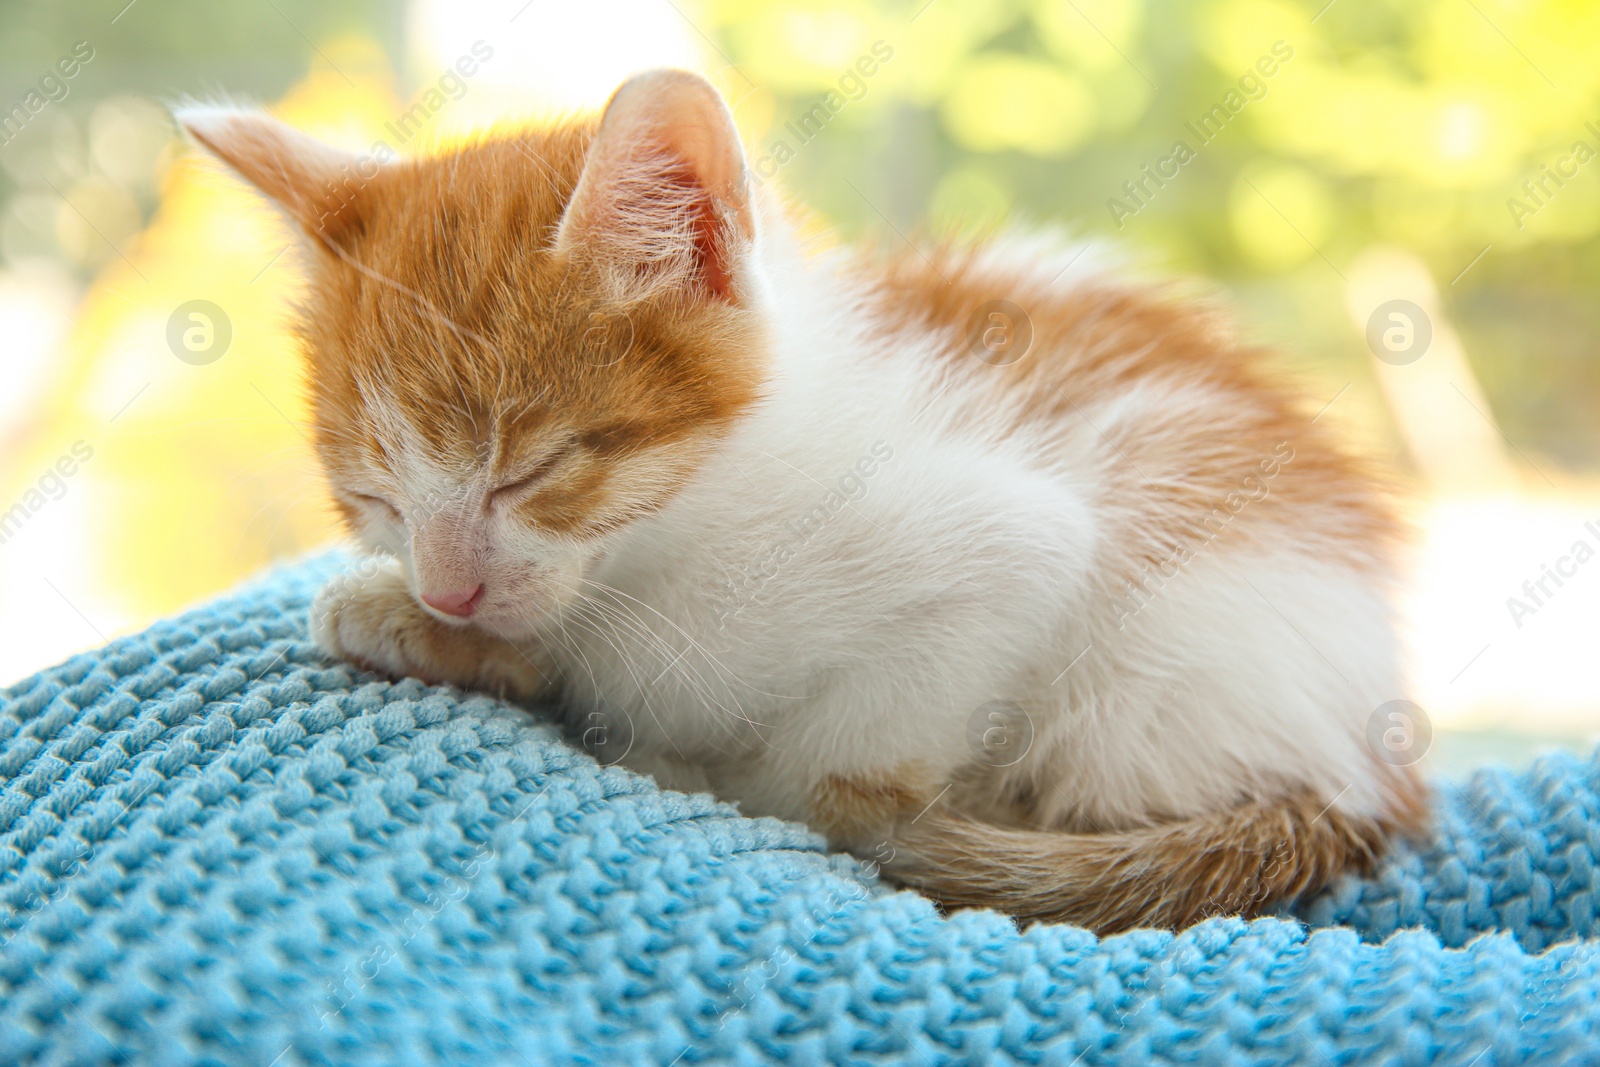 Photo of Cute little kitten sleeping on blue blanket, closeup. Baby animal